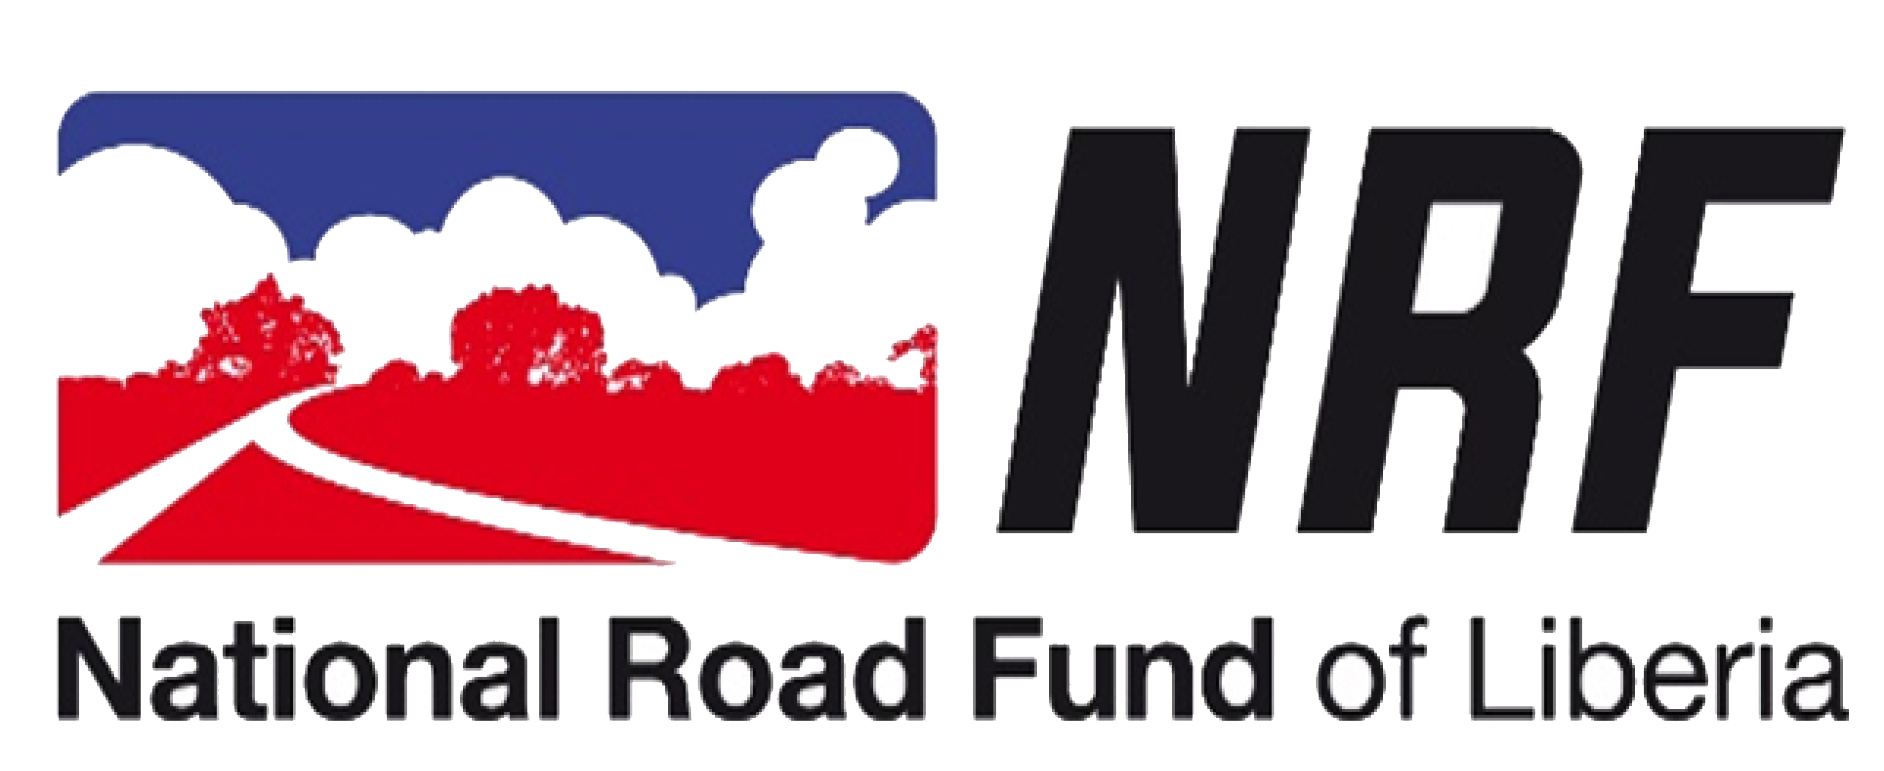 road fund logo